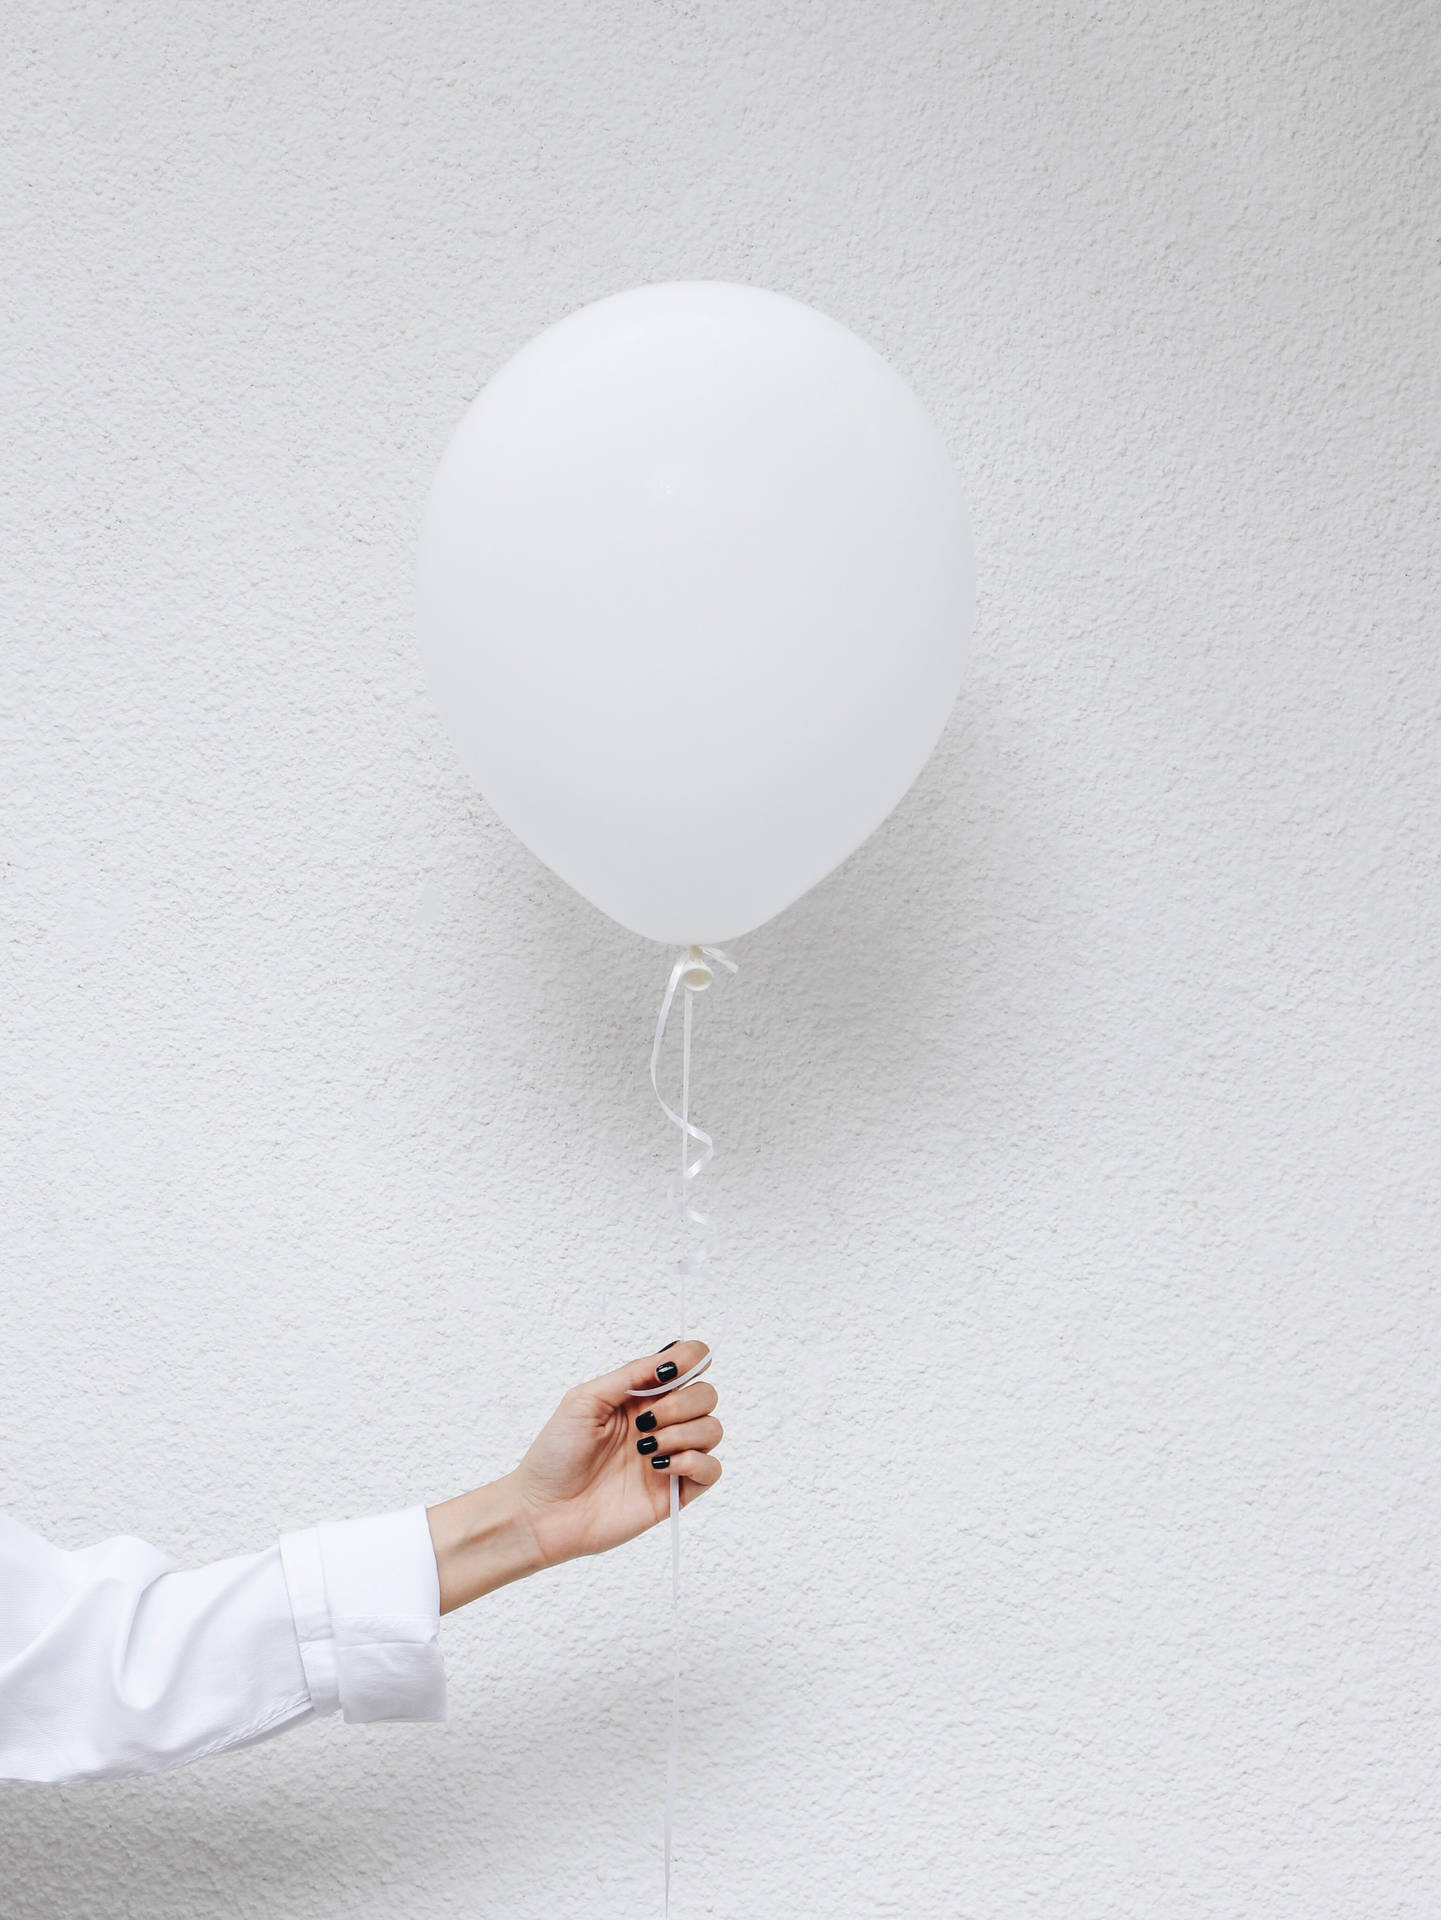 Balloon In White Aesthetic